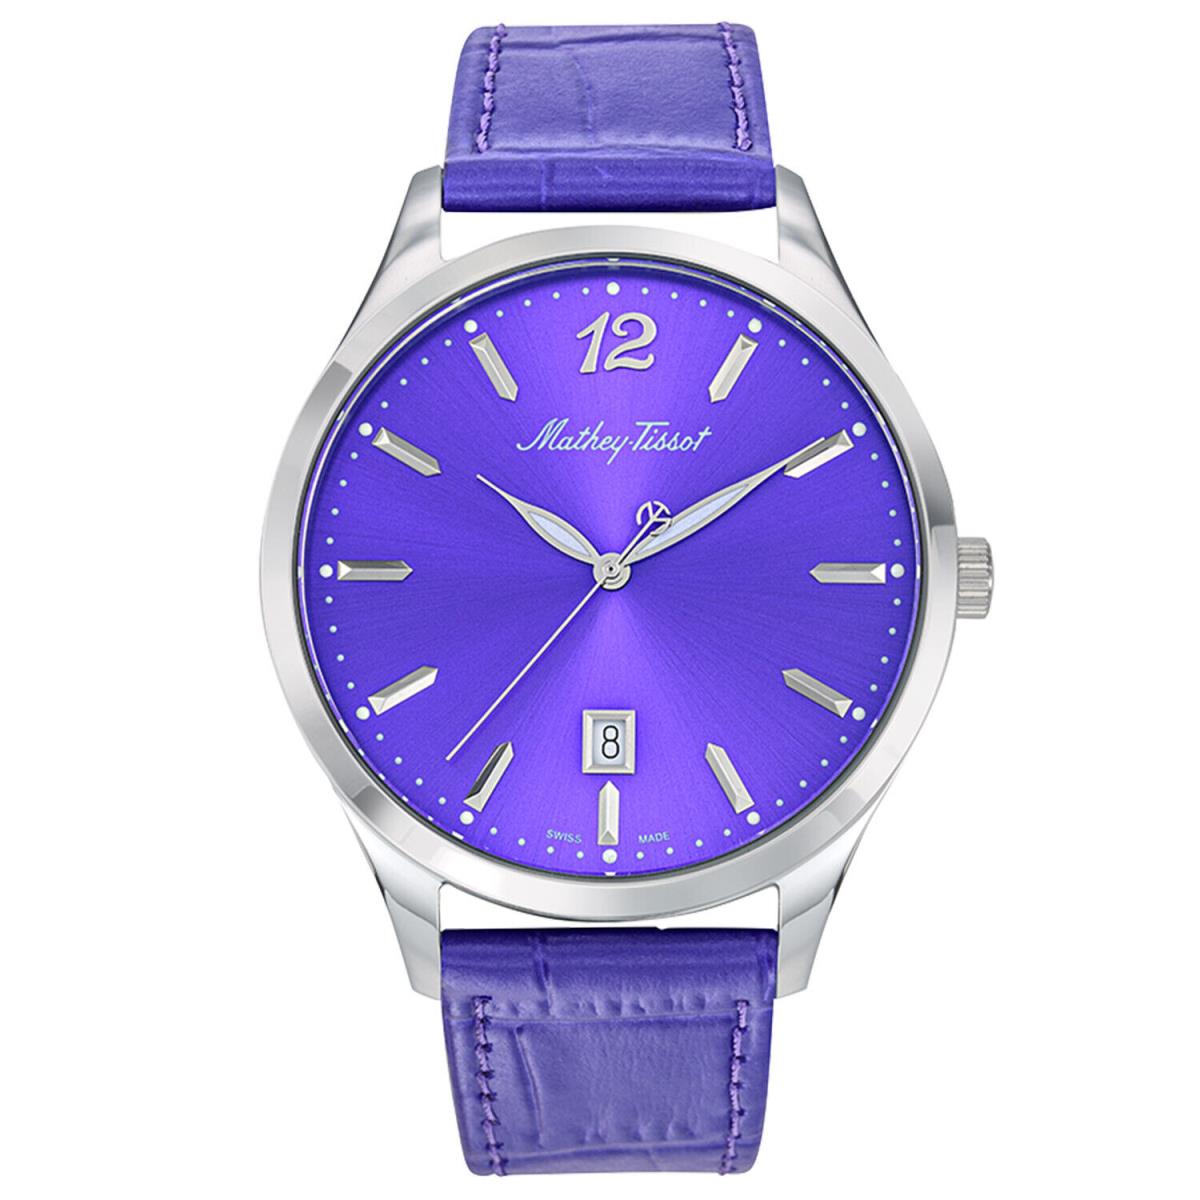 Mathey Tissot Men`s Urban Purple Dial Watch - H411PU